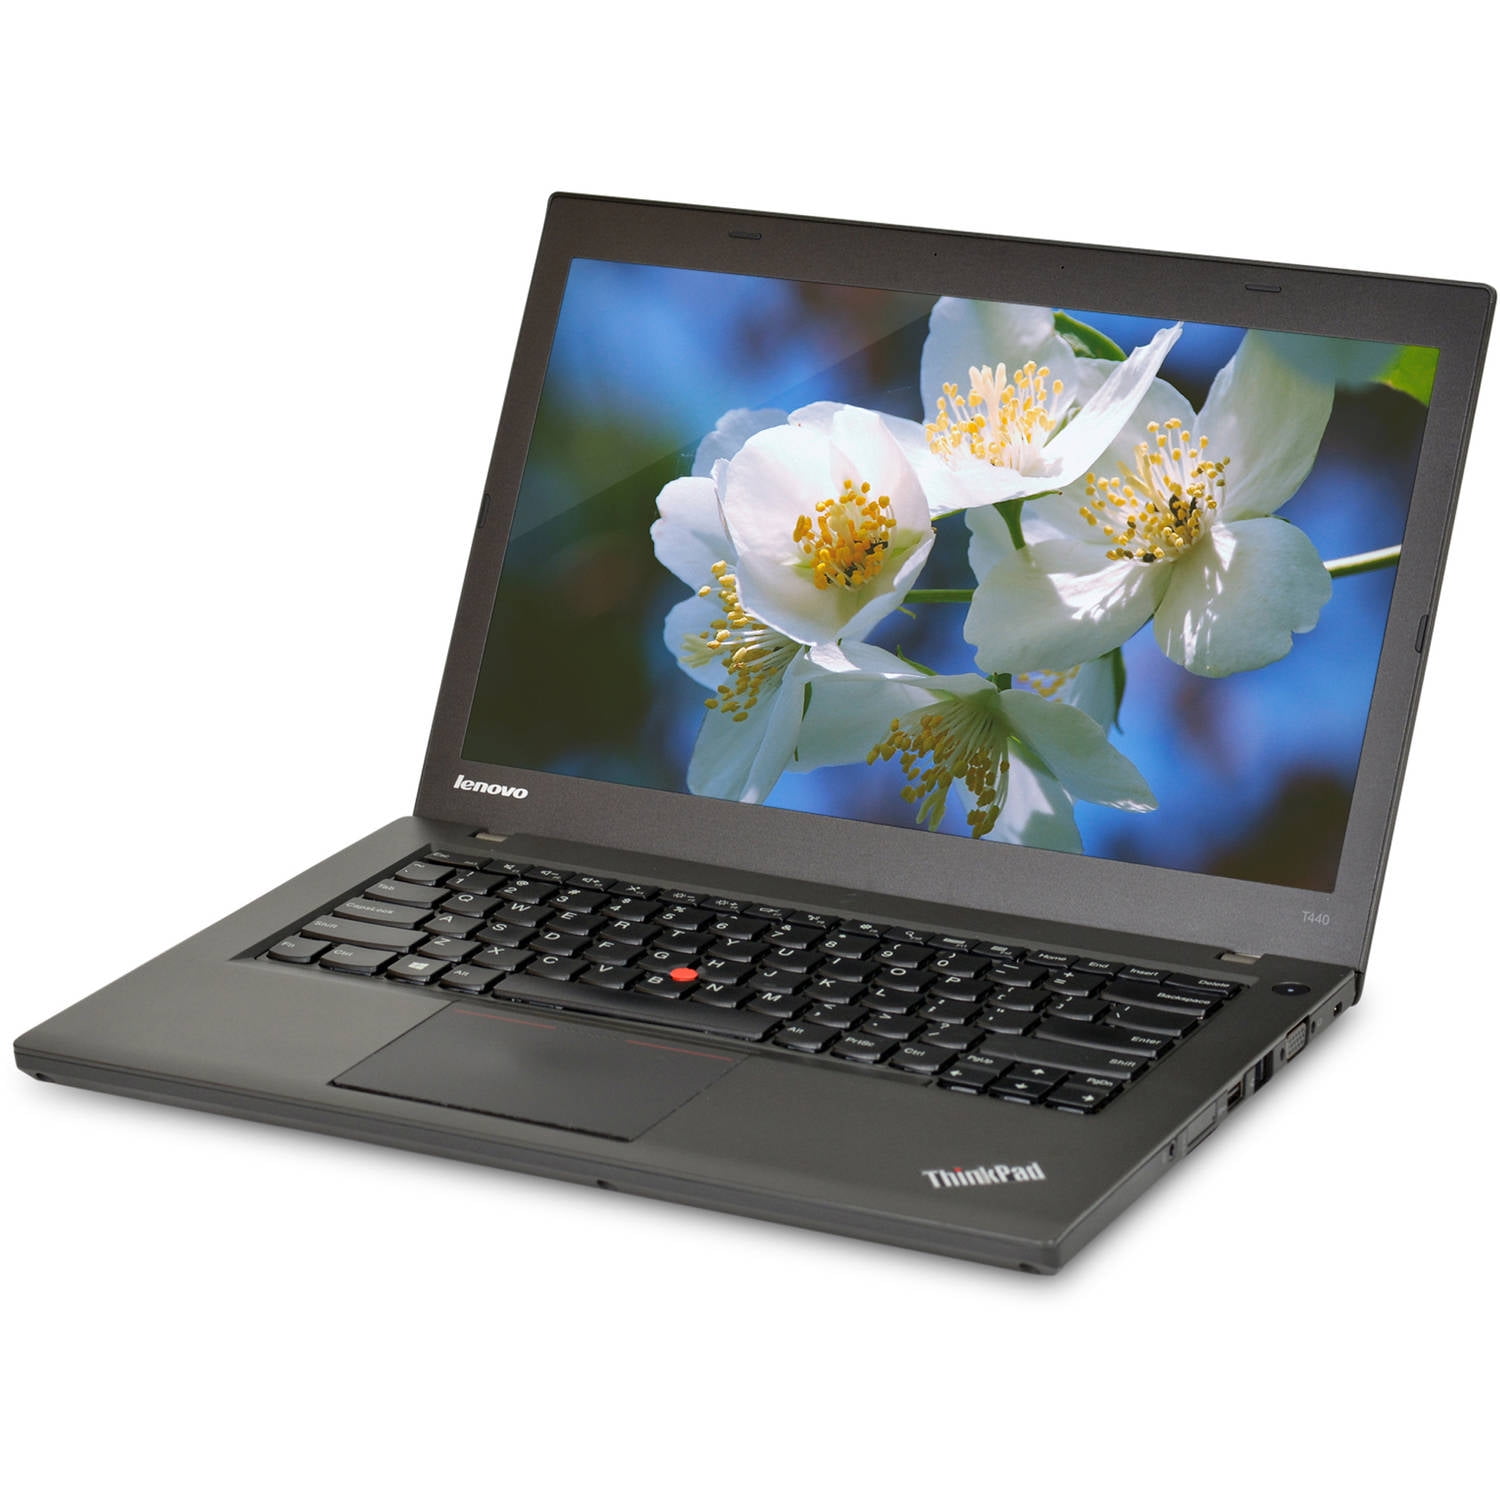 Lenovo ThinkPad T440 14" Laptop, Windows 10 Core i5-4300U Processor, 8GB RAM, 120GB Solid State Drive - Walmart.com